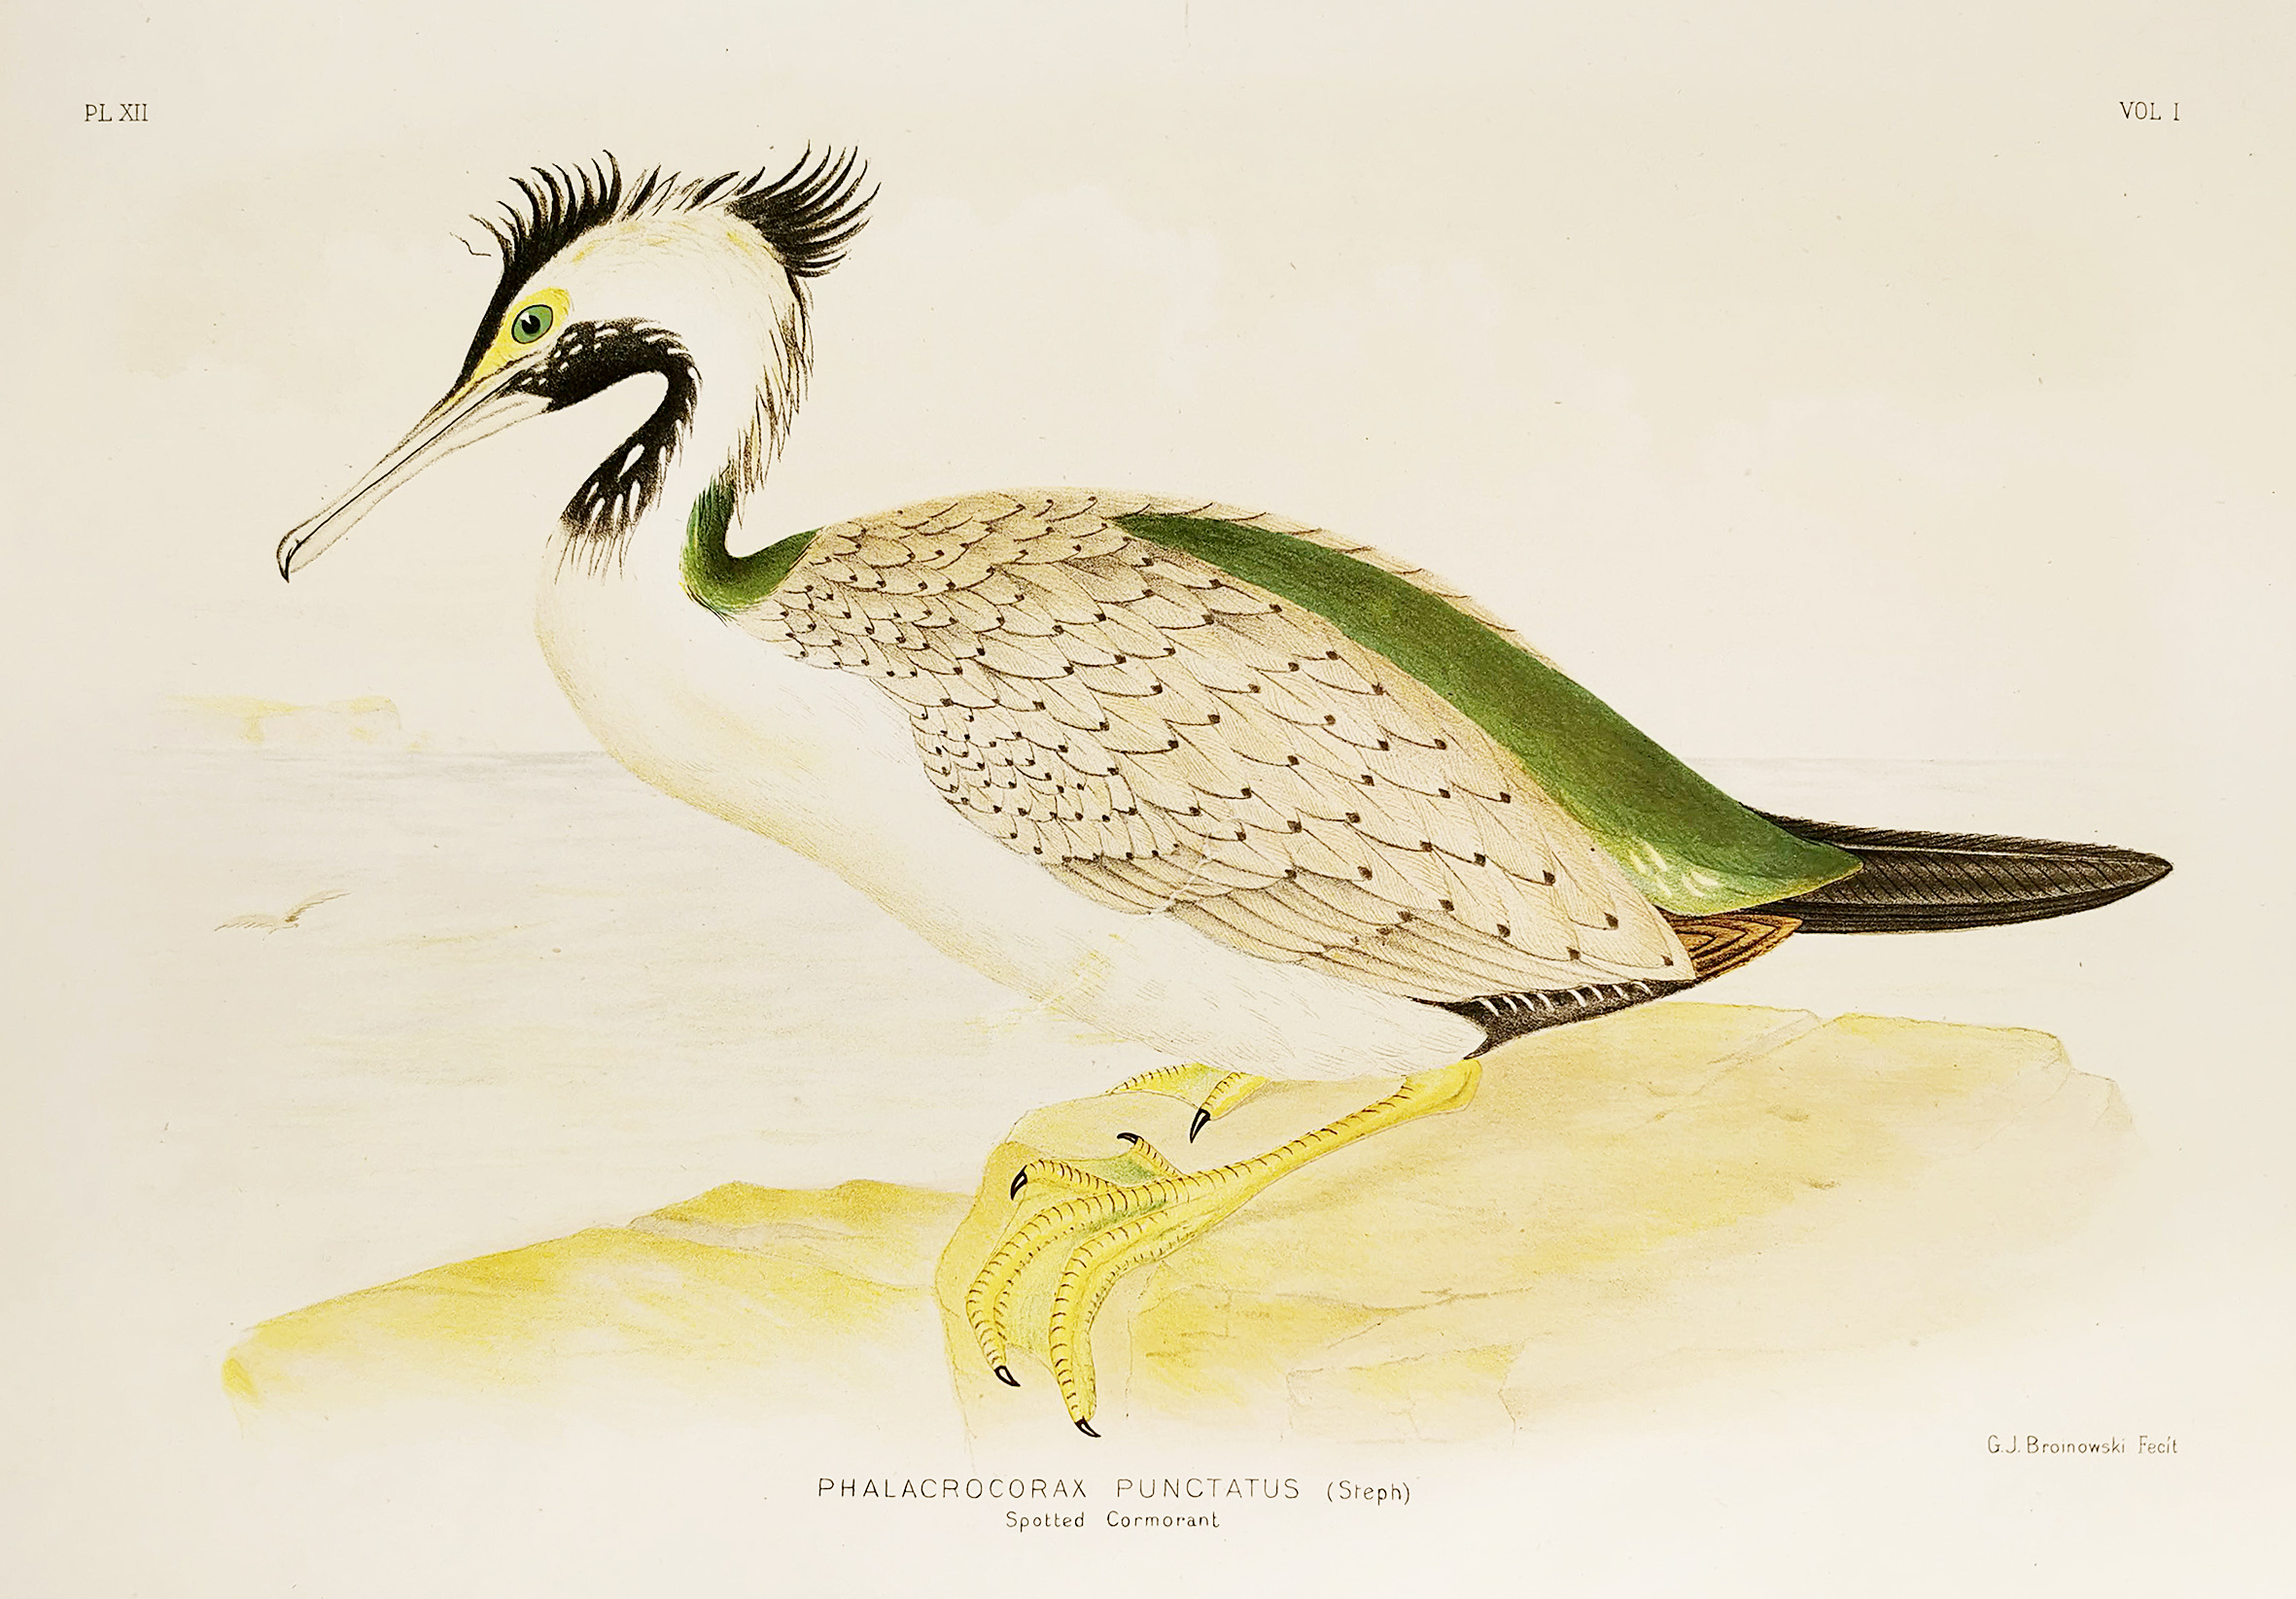 Phalacrocorax Punctatus. Spotted Cormorant. - Antique Print from 1889